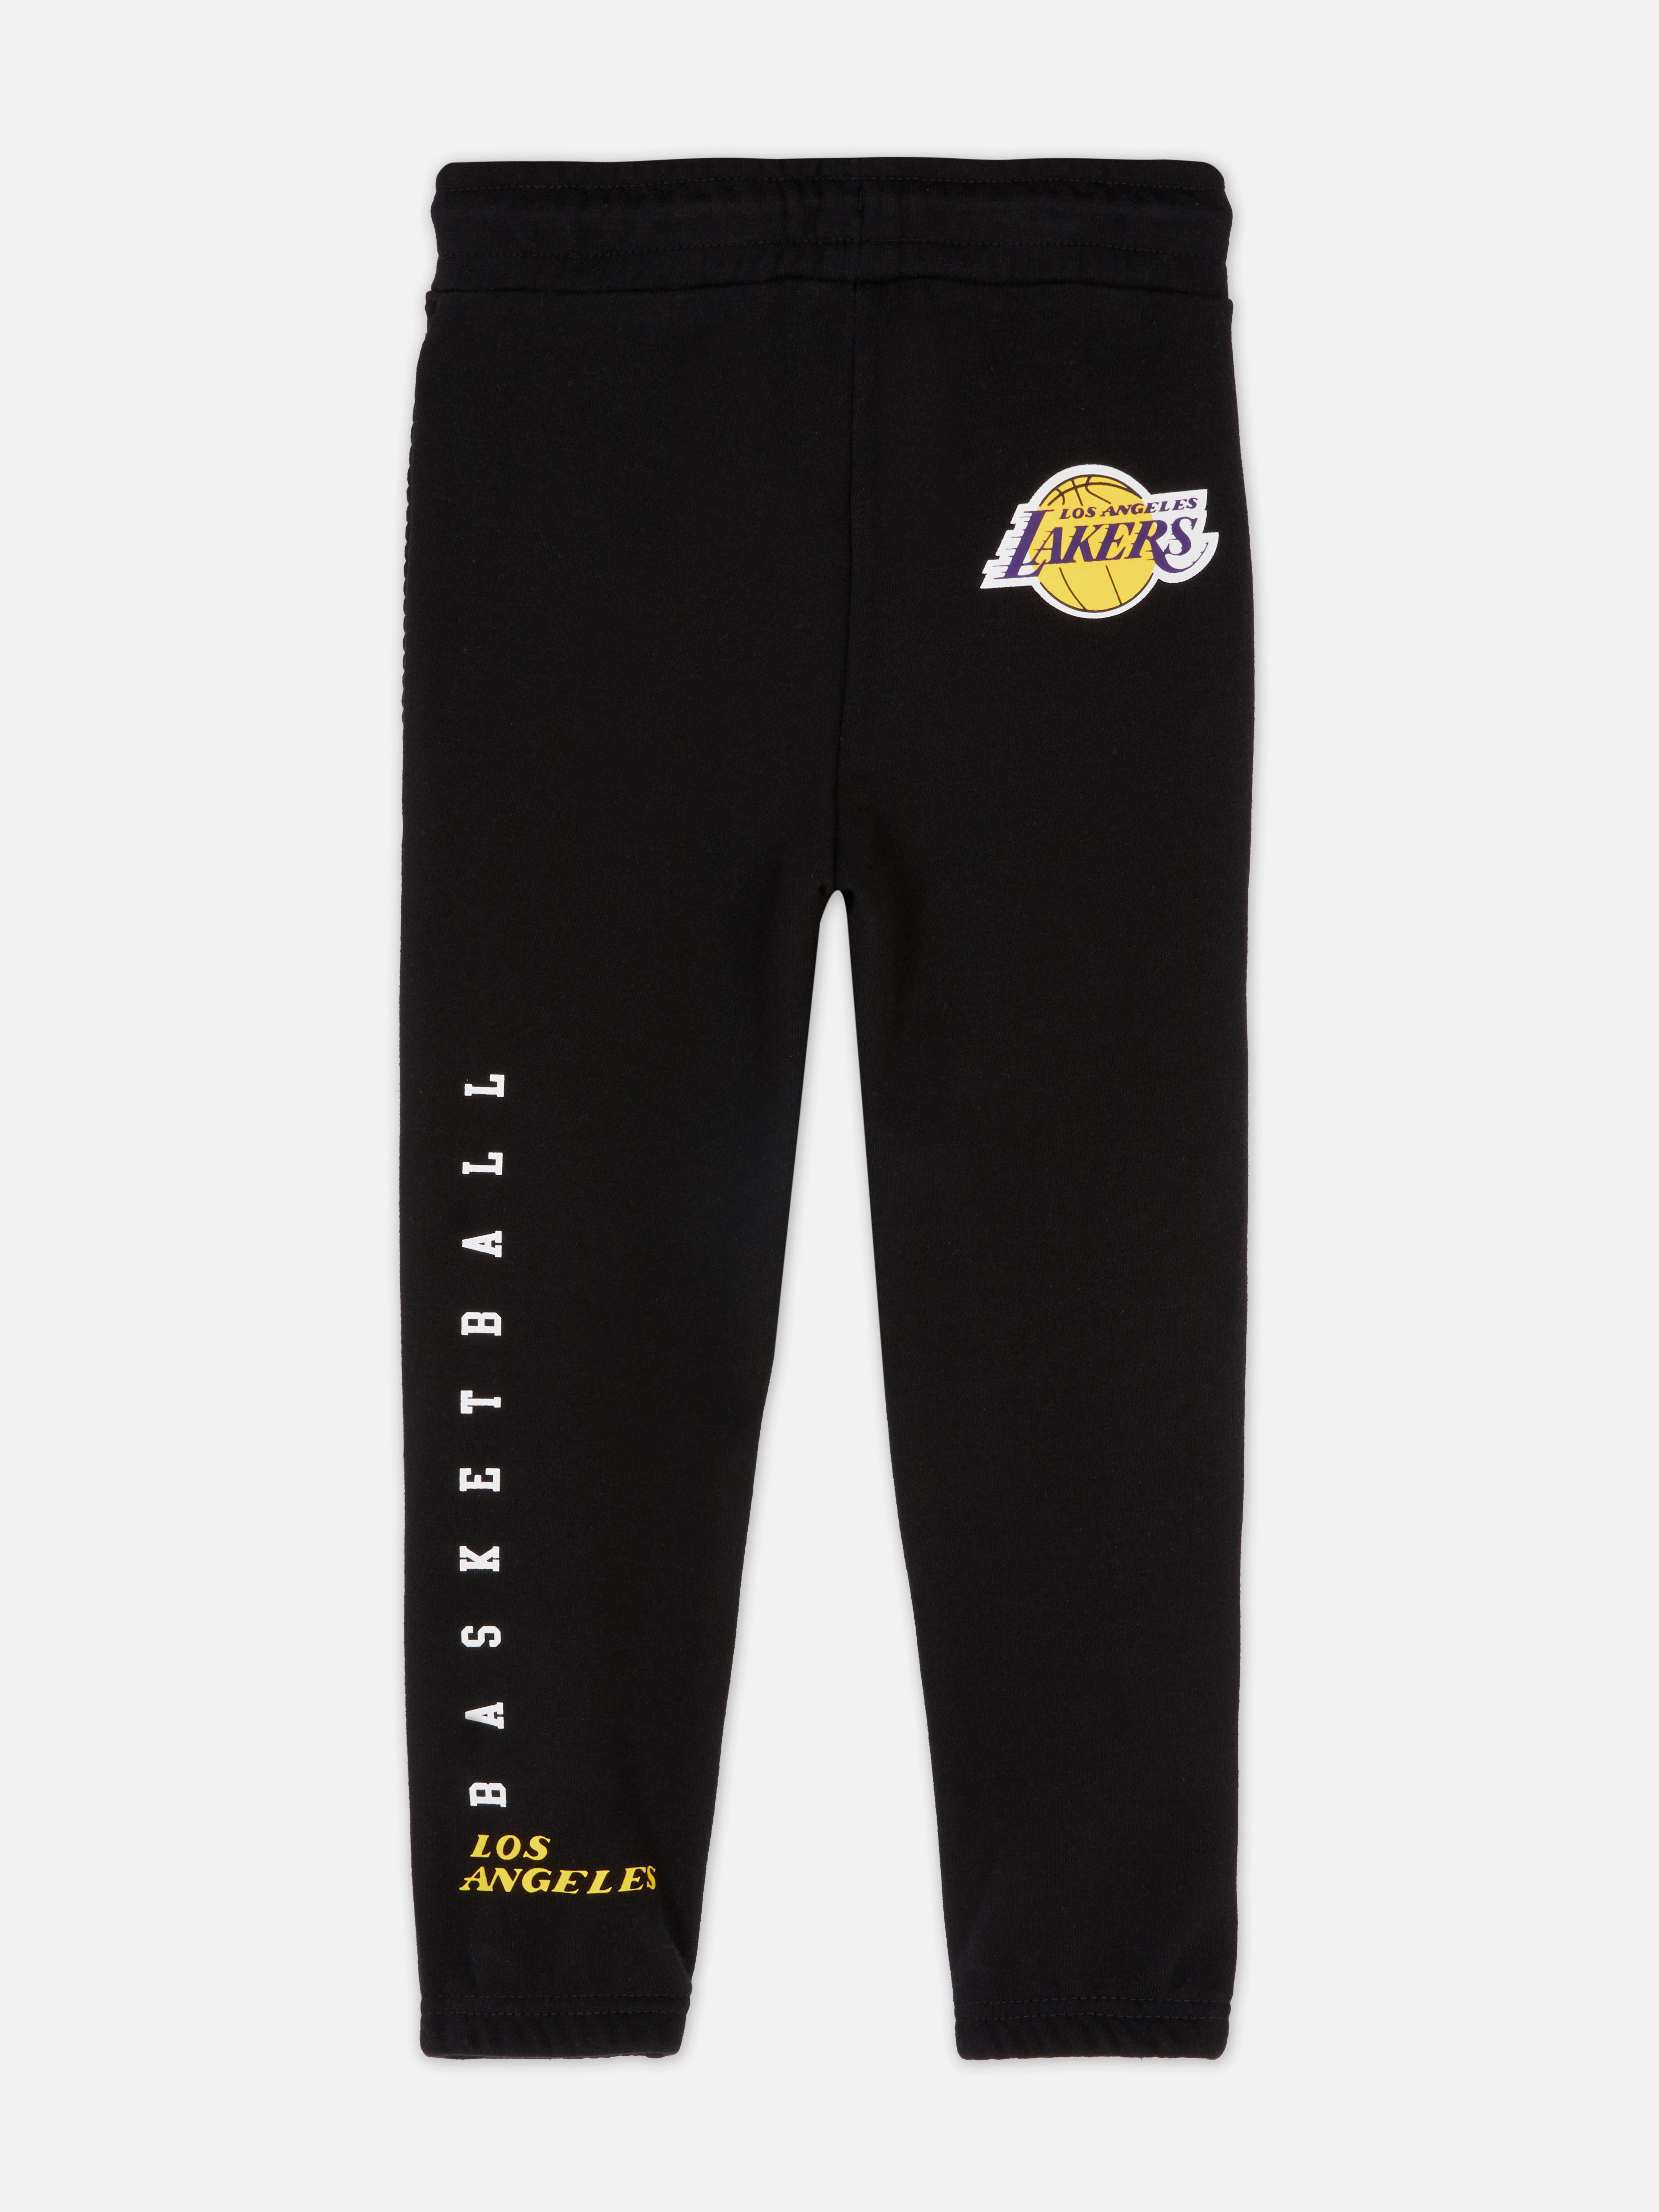 Official Los Angeles Lakers Pants, Leggings, Pajama Pants, Joggers